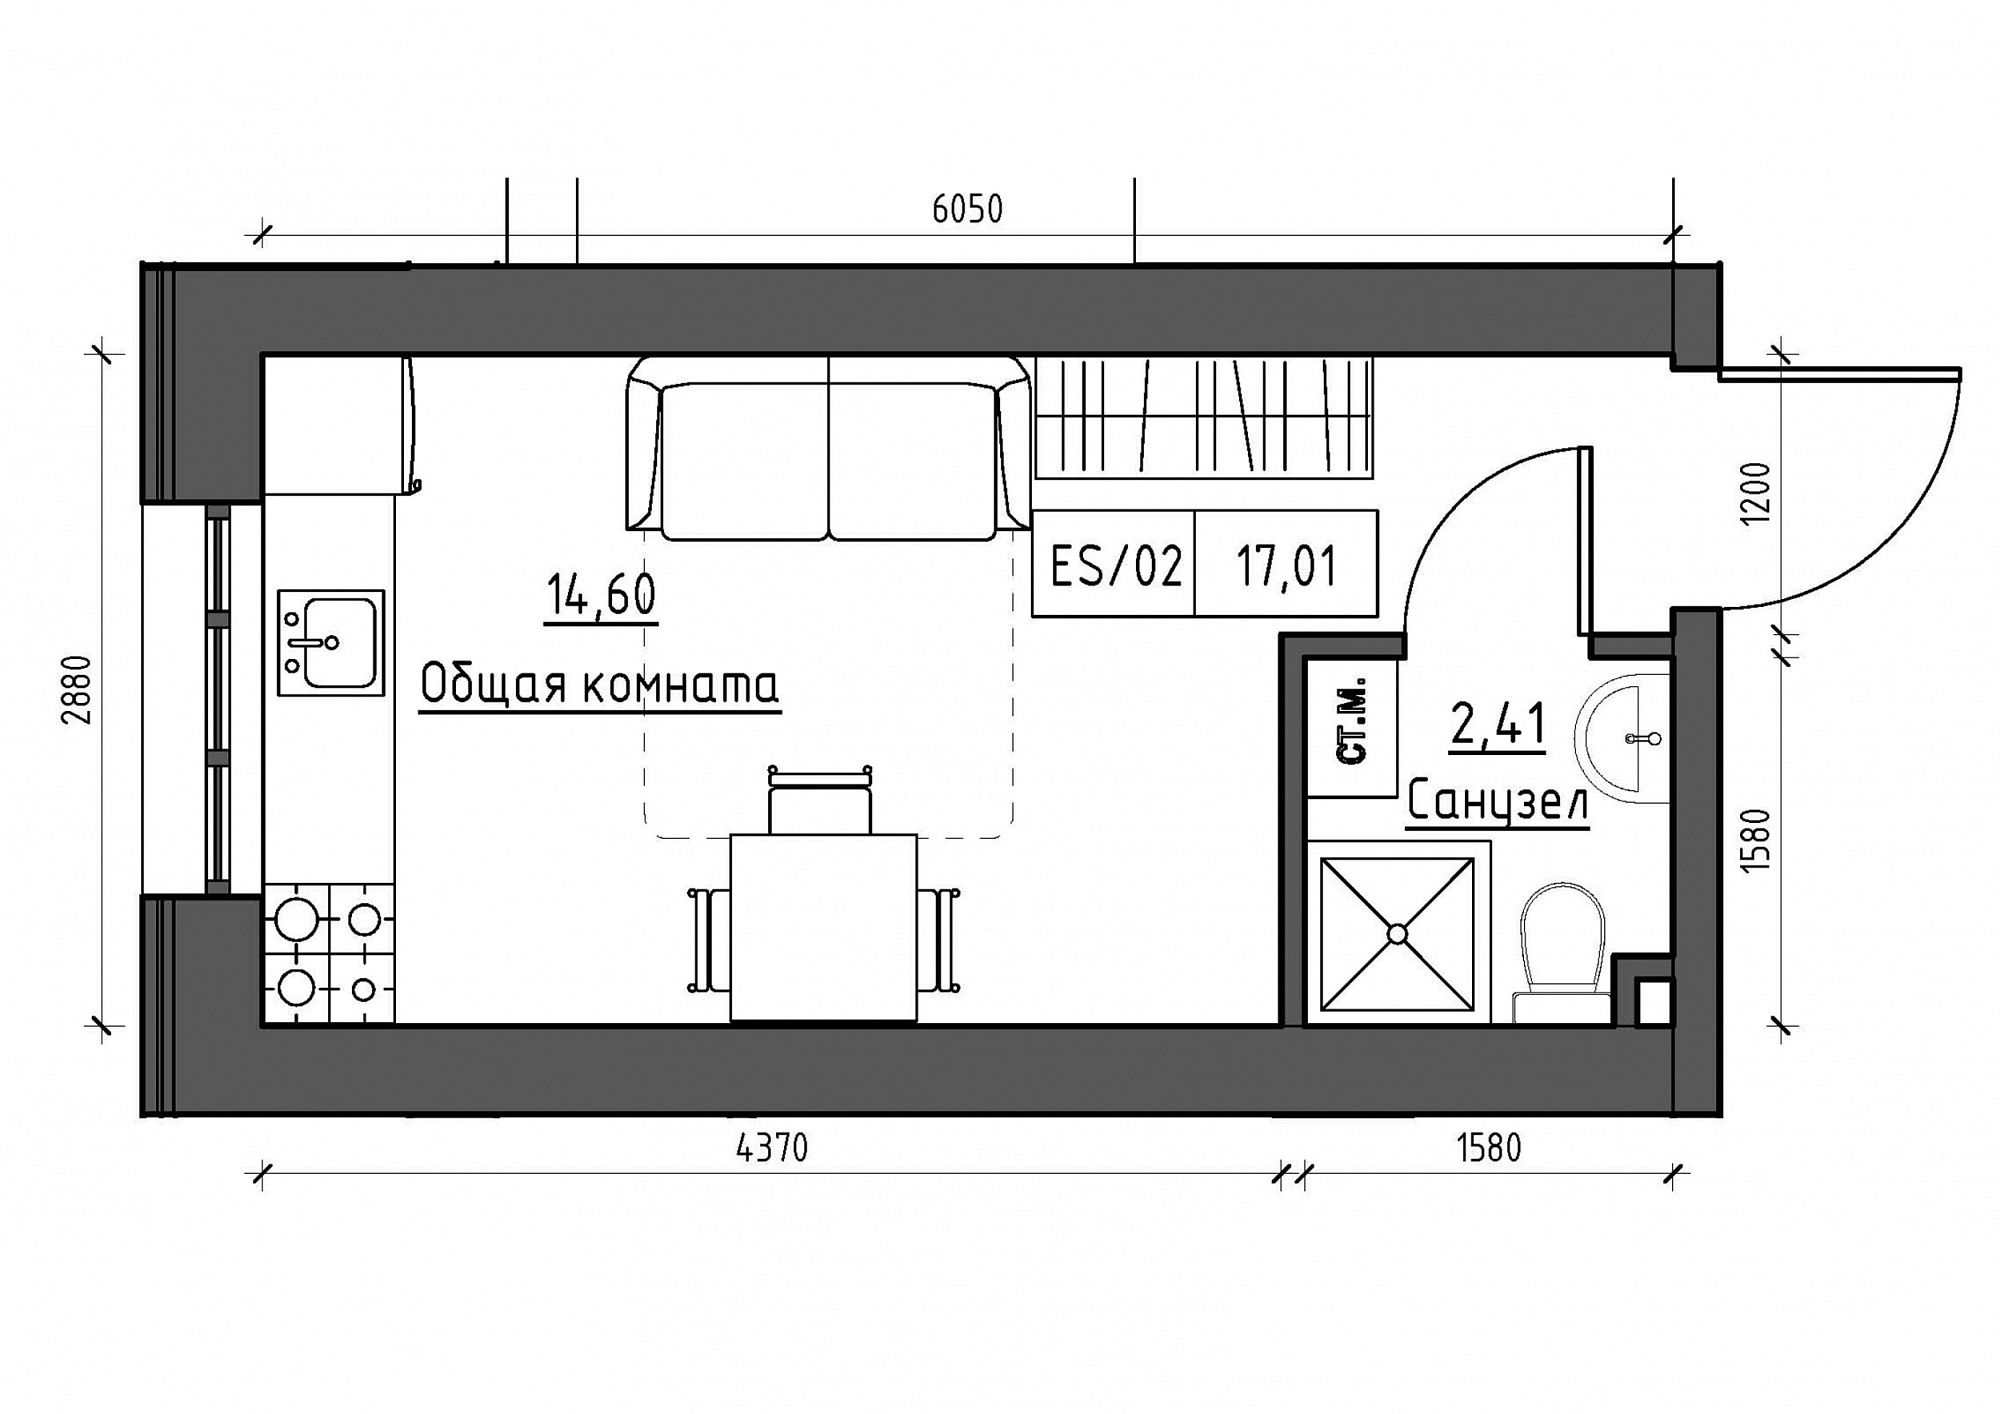 Planning Smart flats area 17.02m2, KS-011-04/0002.